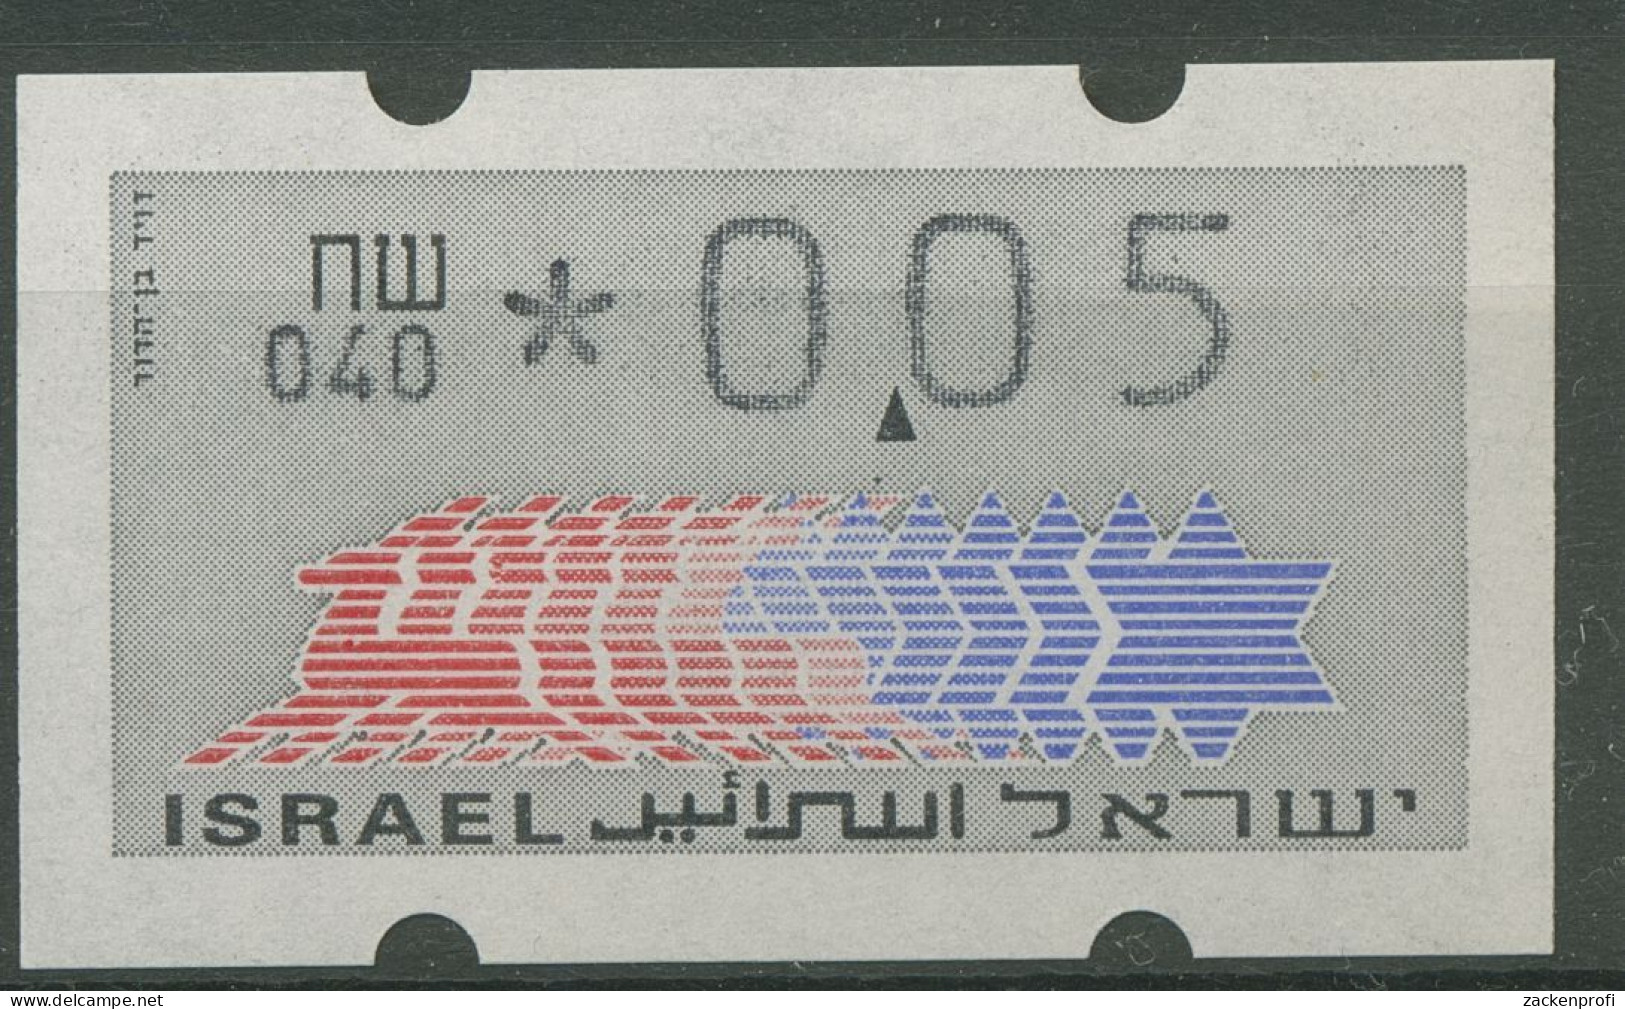 Israel ATM 1990 Hirsch Automat 040 Einzelwert ATM 3.3.40 Postfrisch - Frankeervignetten (Frama)